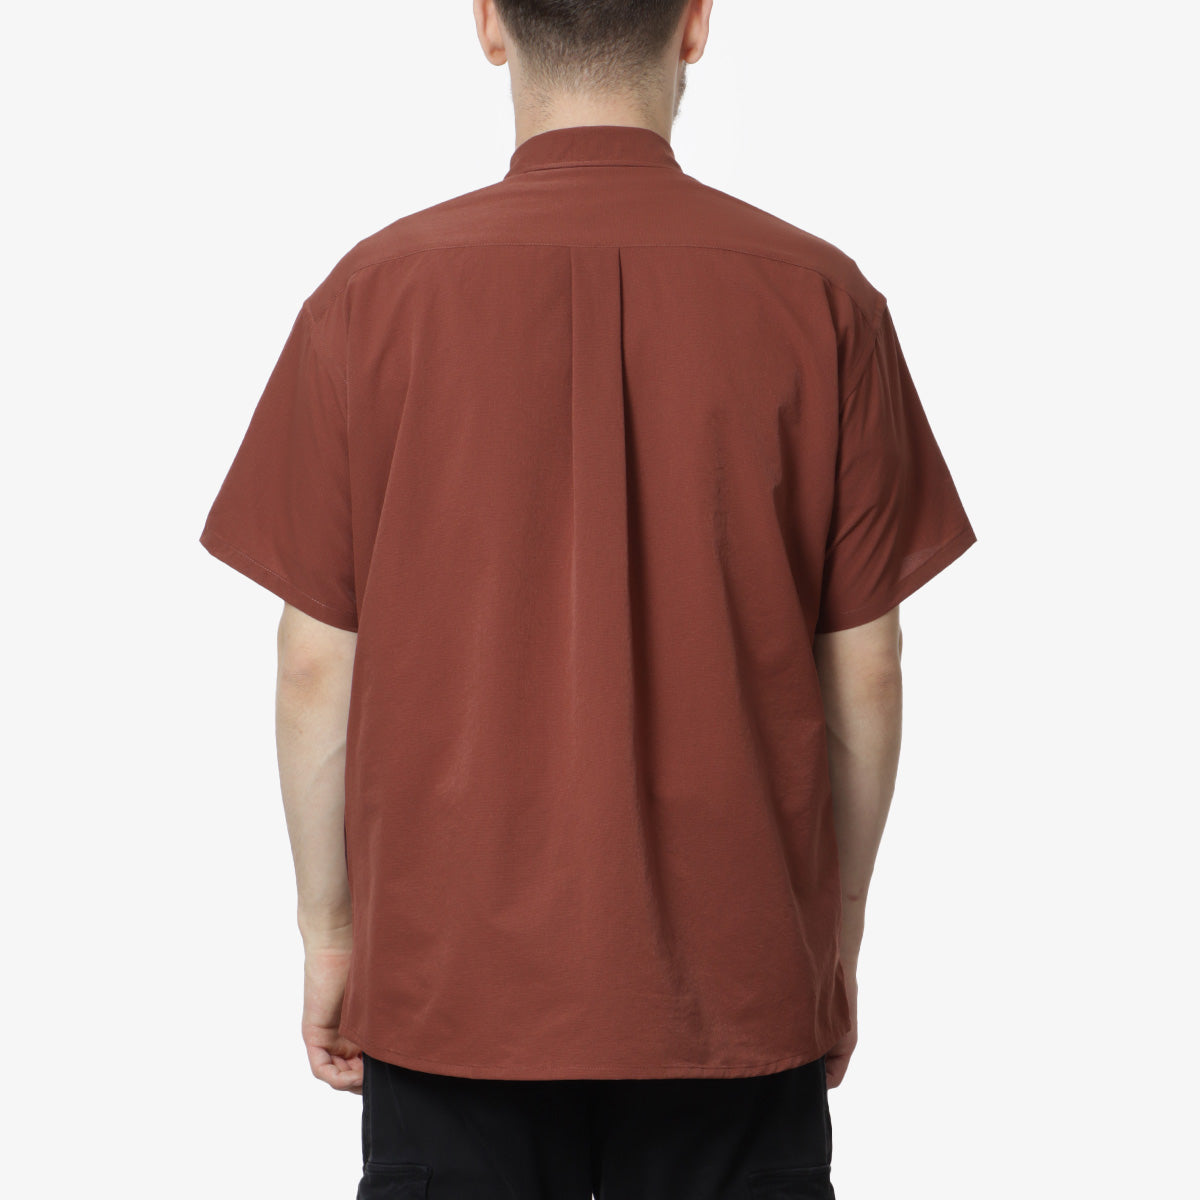 Nanga Dot Air Comfy Short Sleeve Shirt, Brown, Detail Shot 4